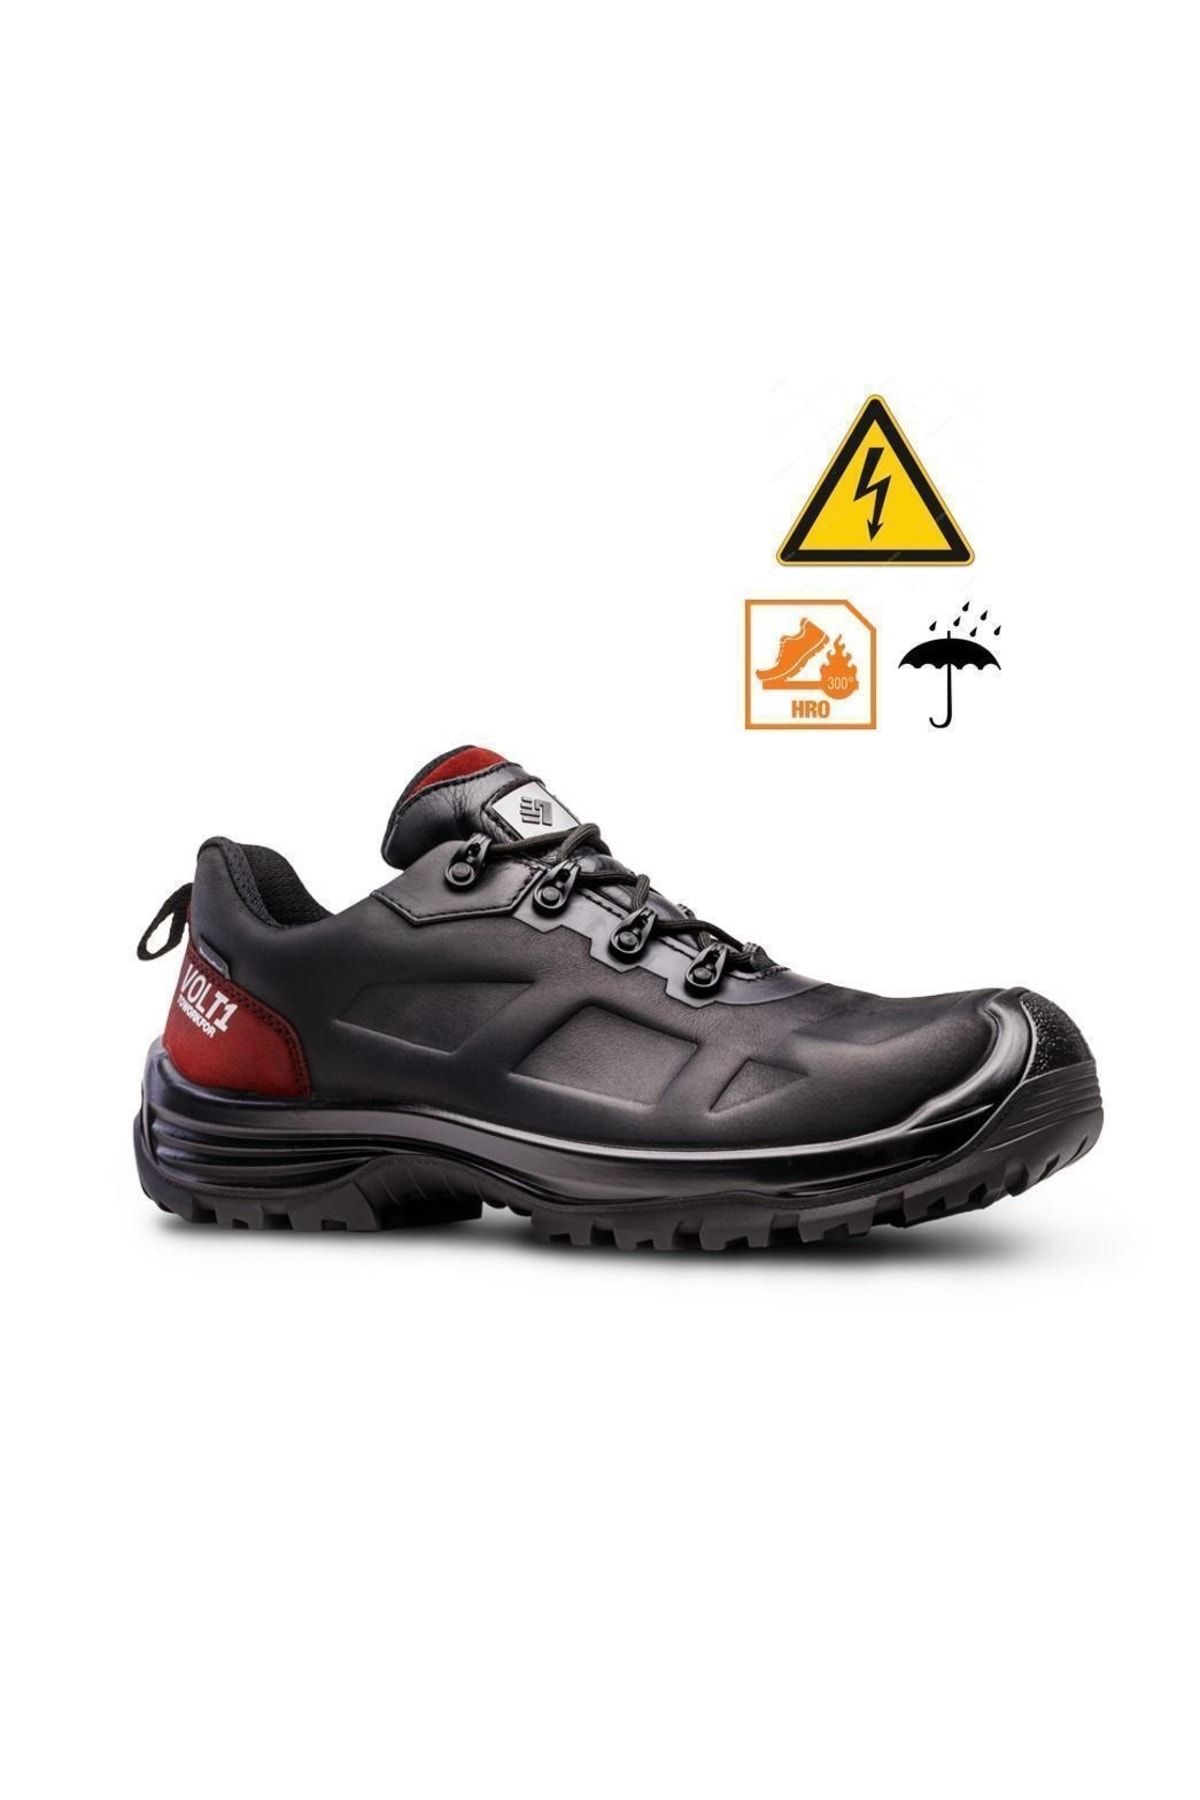 TOWORKFOR Ohm Sb | P | Src | Fo | E | Wr | Hro Elektrikçi Iş Ayakkabısı